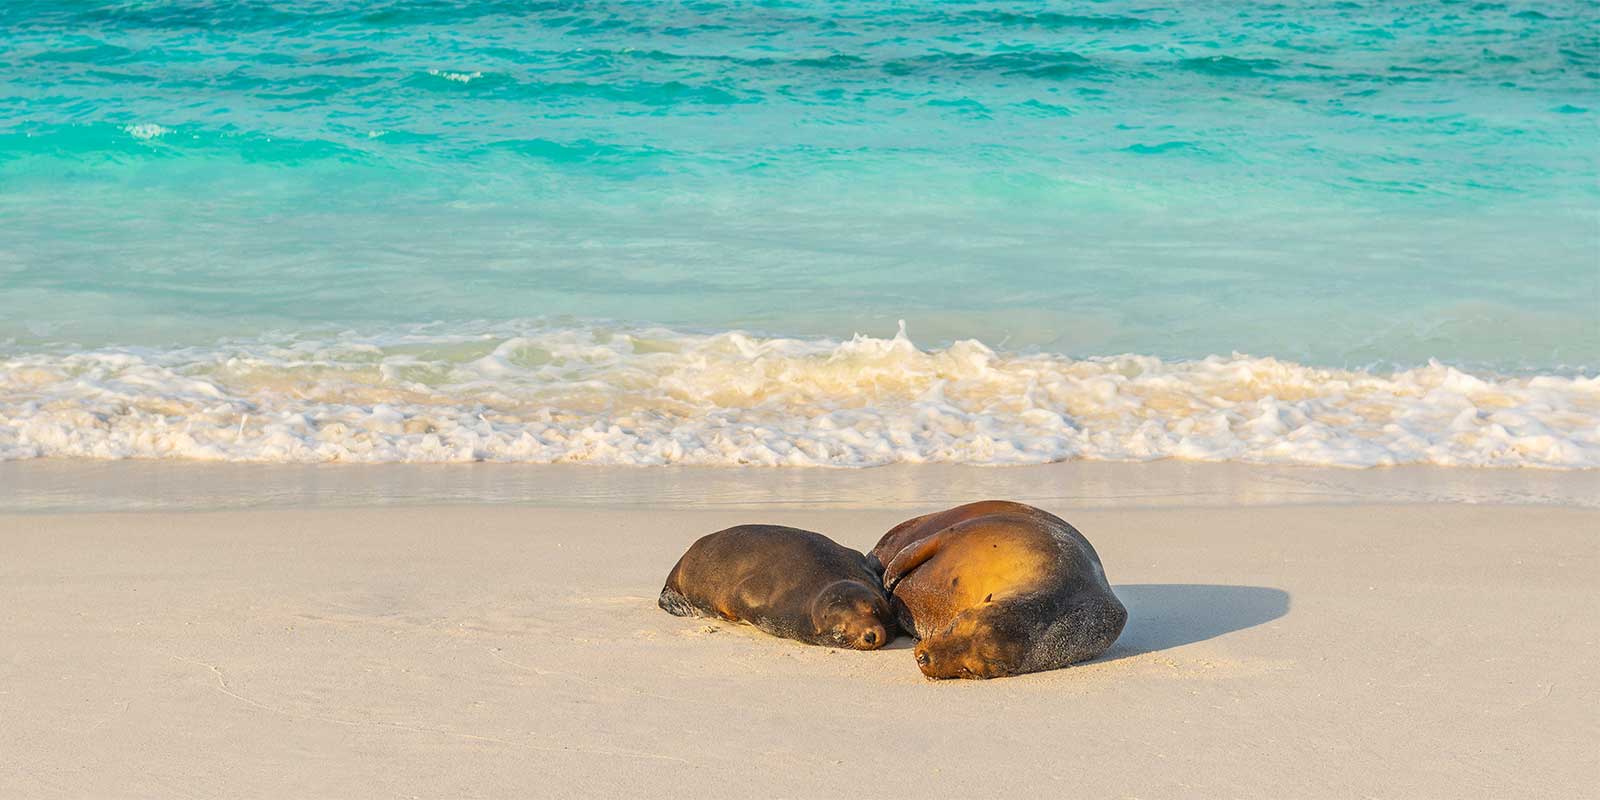 Galapagos sealions sleeping on the beach